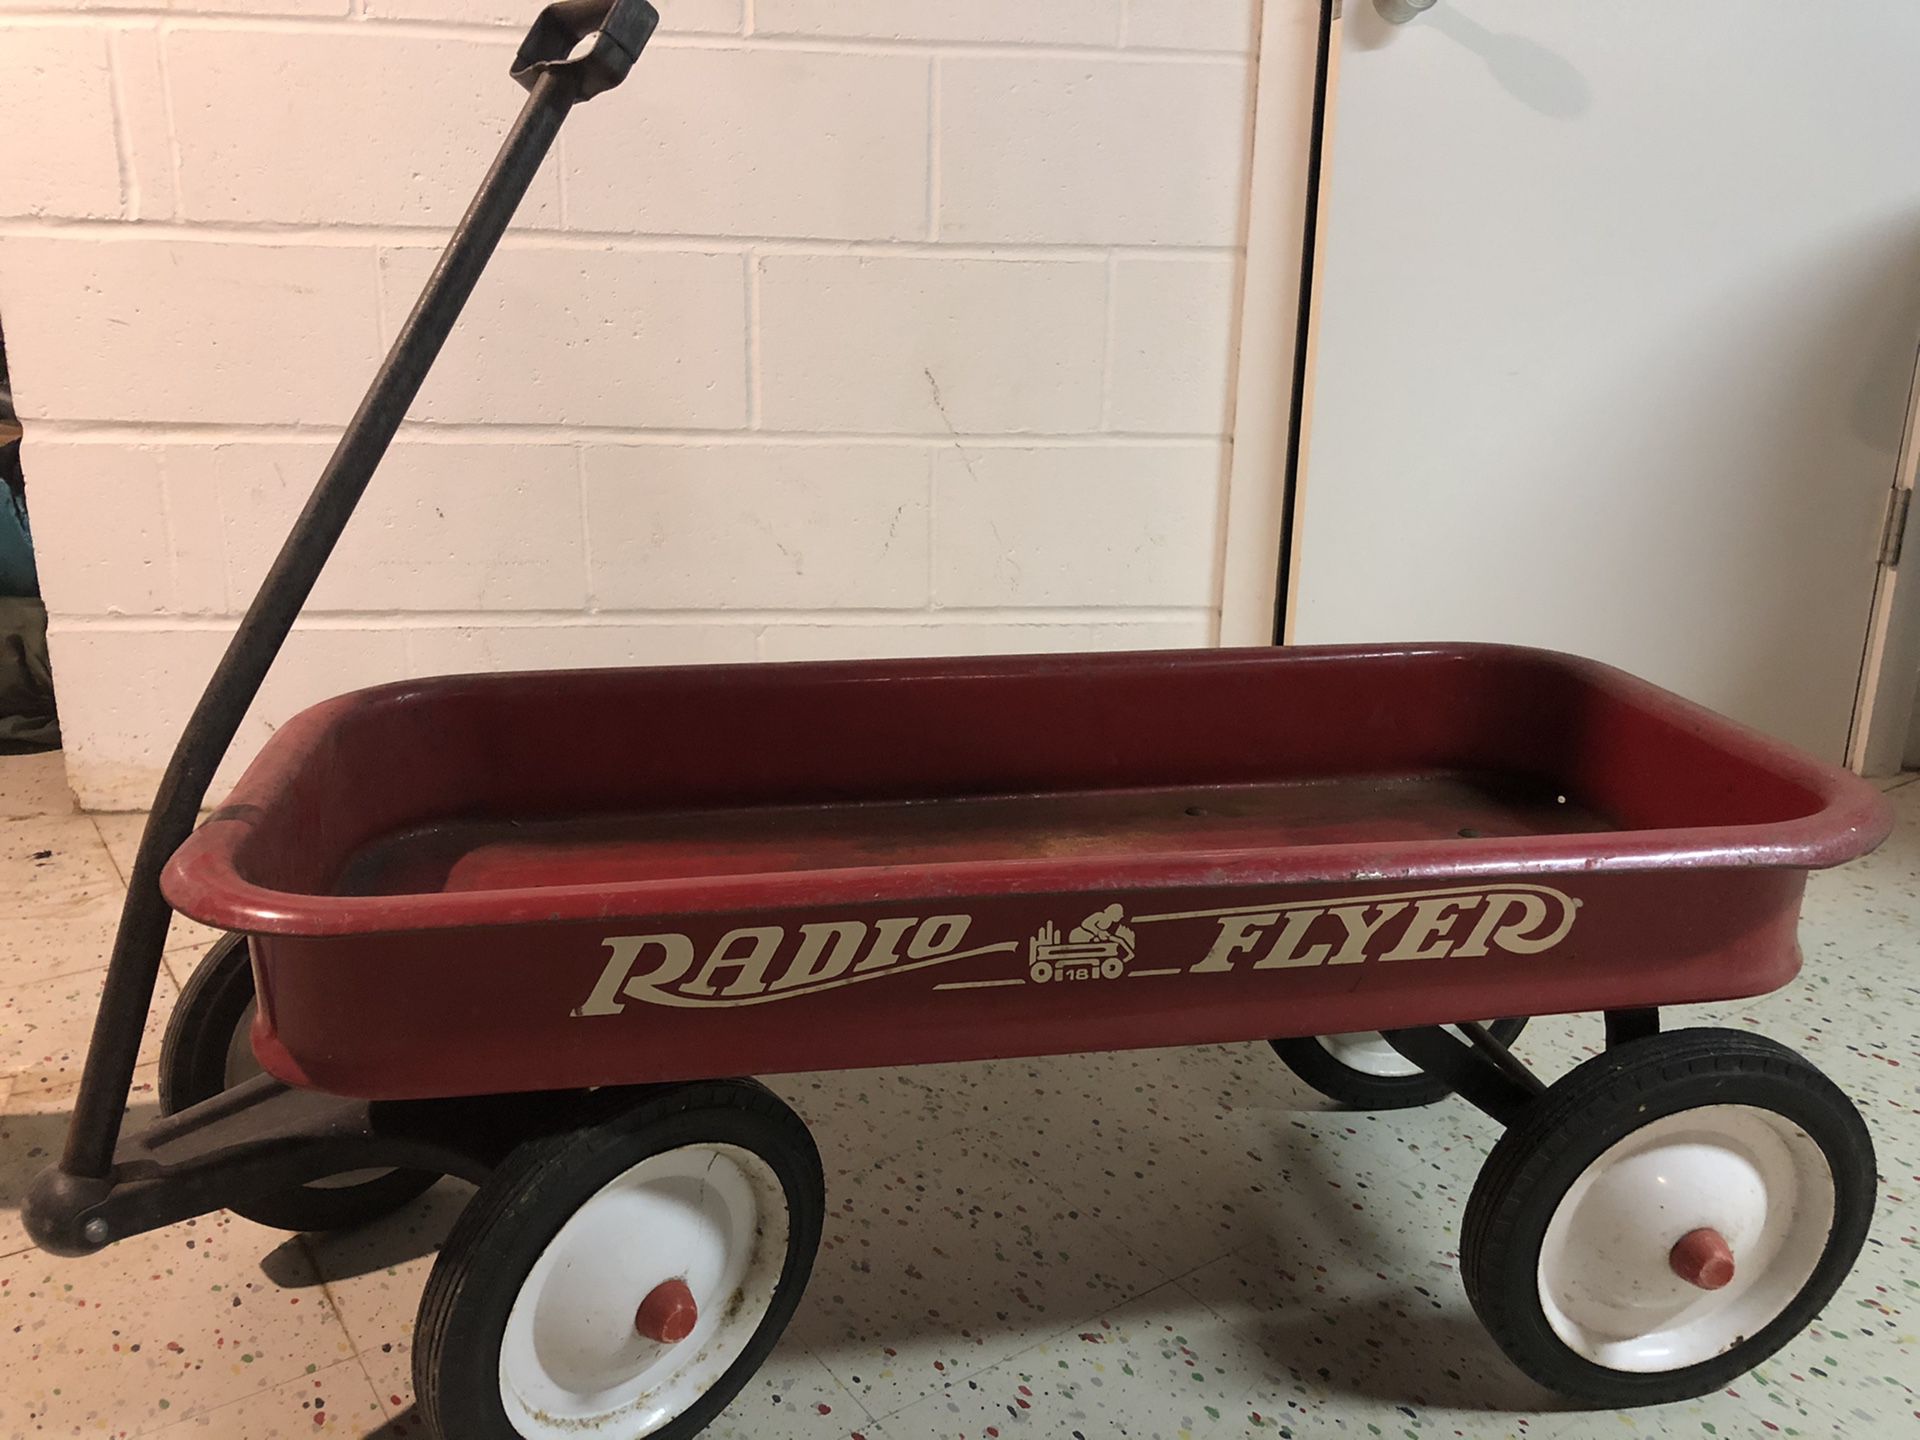 Classic Radio Flyer little red wagon